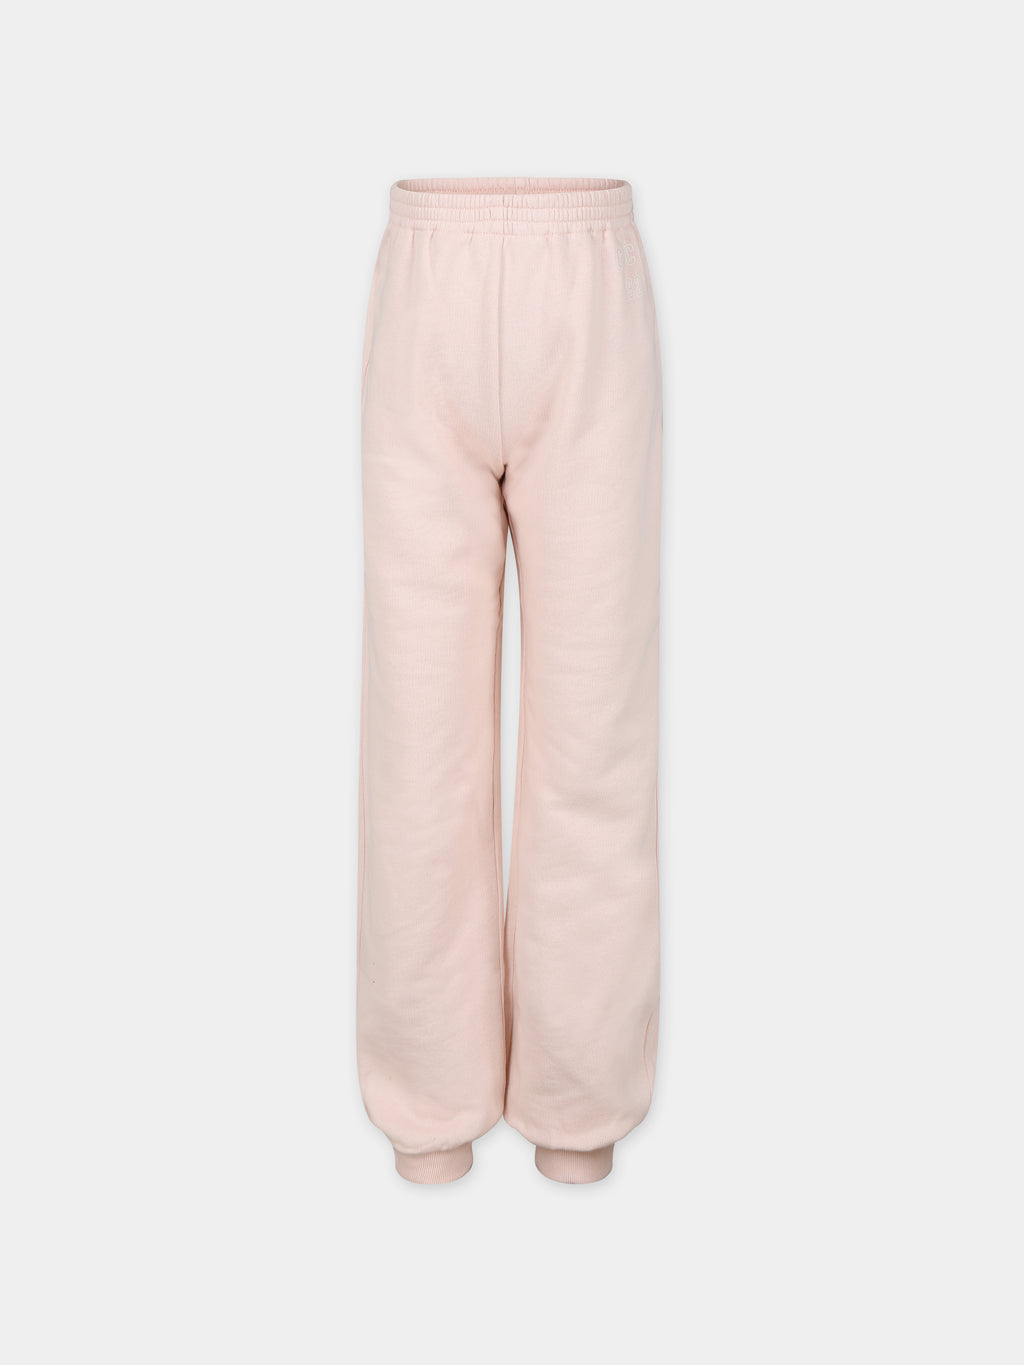 Pantaloni rosa per bambina con logo Gucci 1921